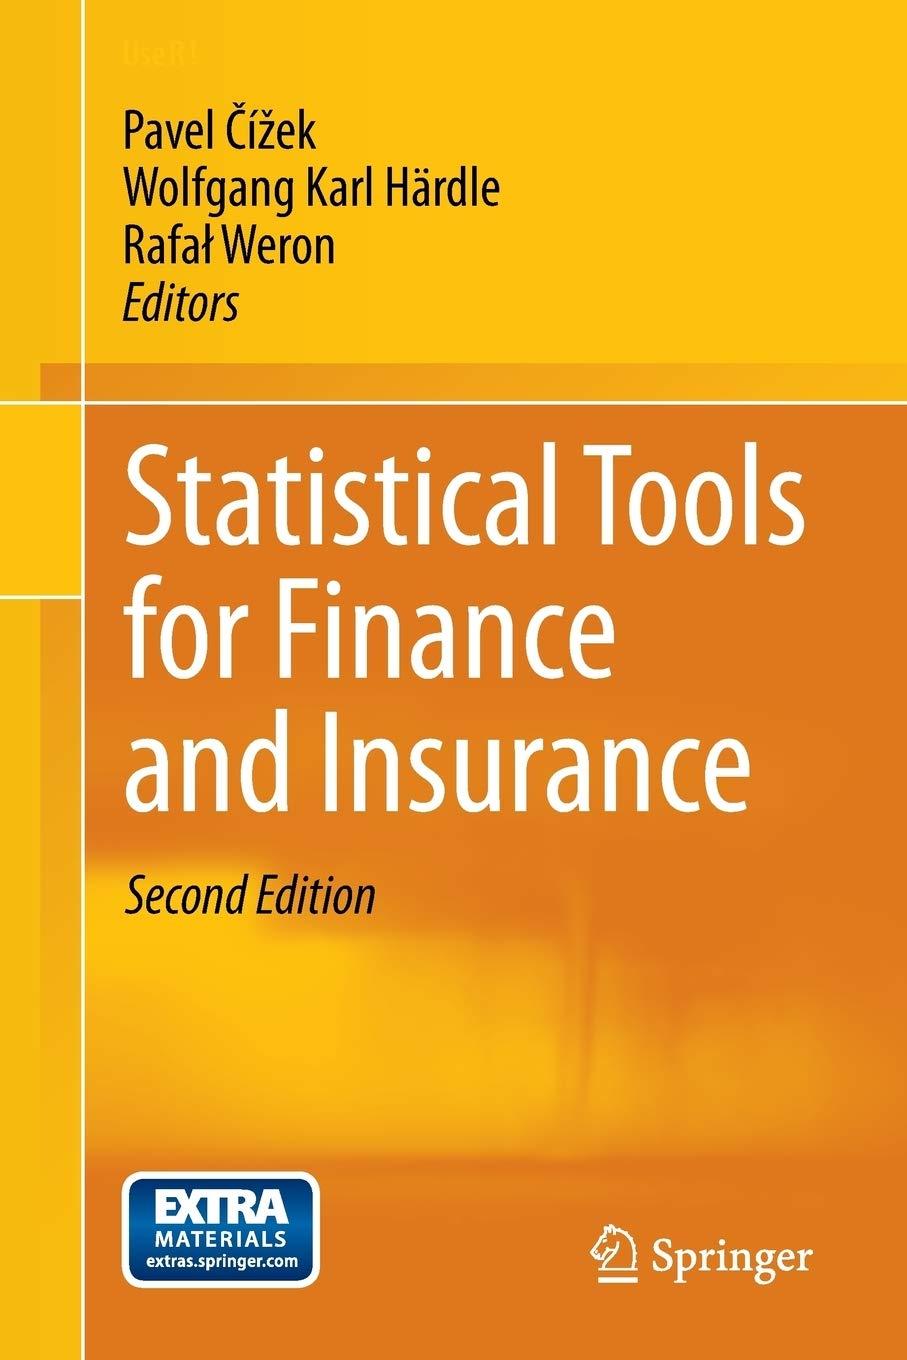 statistical tools for finance and insurance 2nd edition pavel cizek, wolfgang karl härdle, rafa? weron